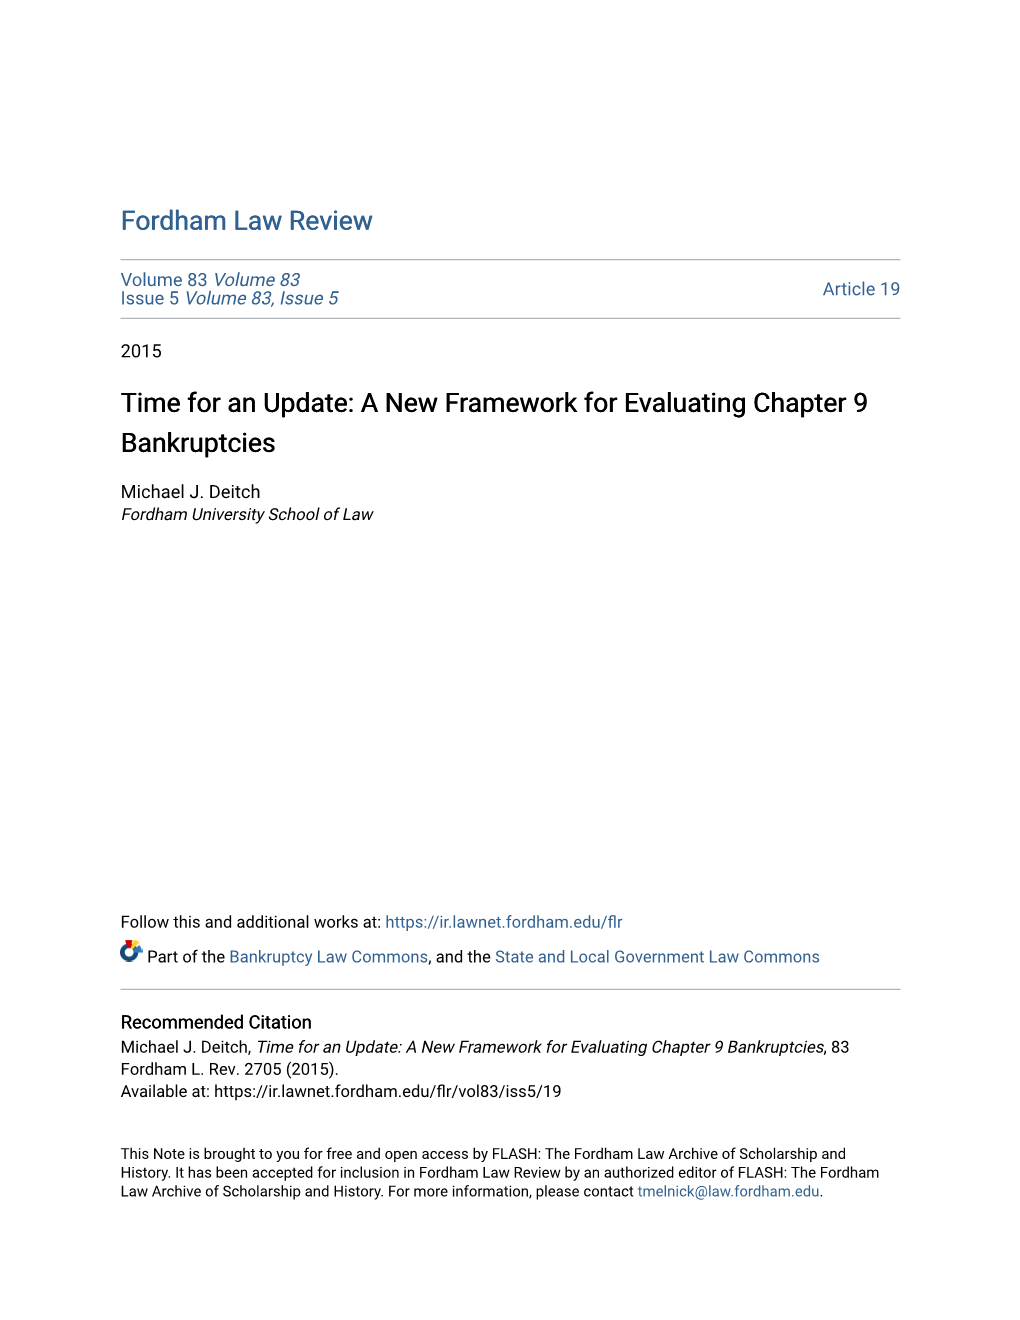 A New Framework for Evaluating Chapter 9 Bankruptcies